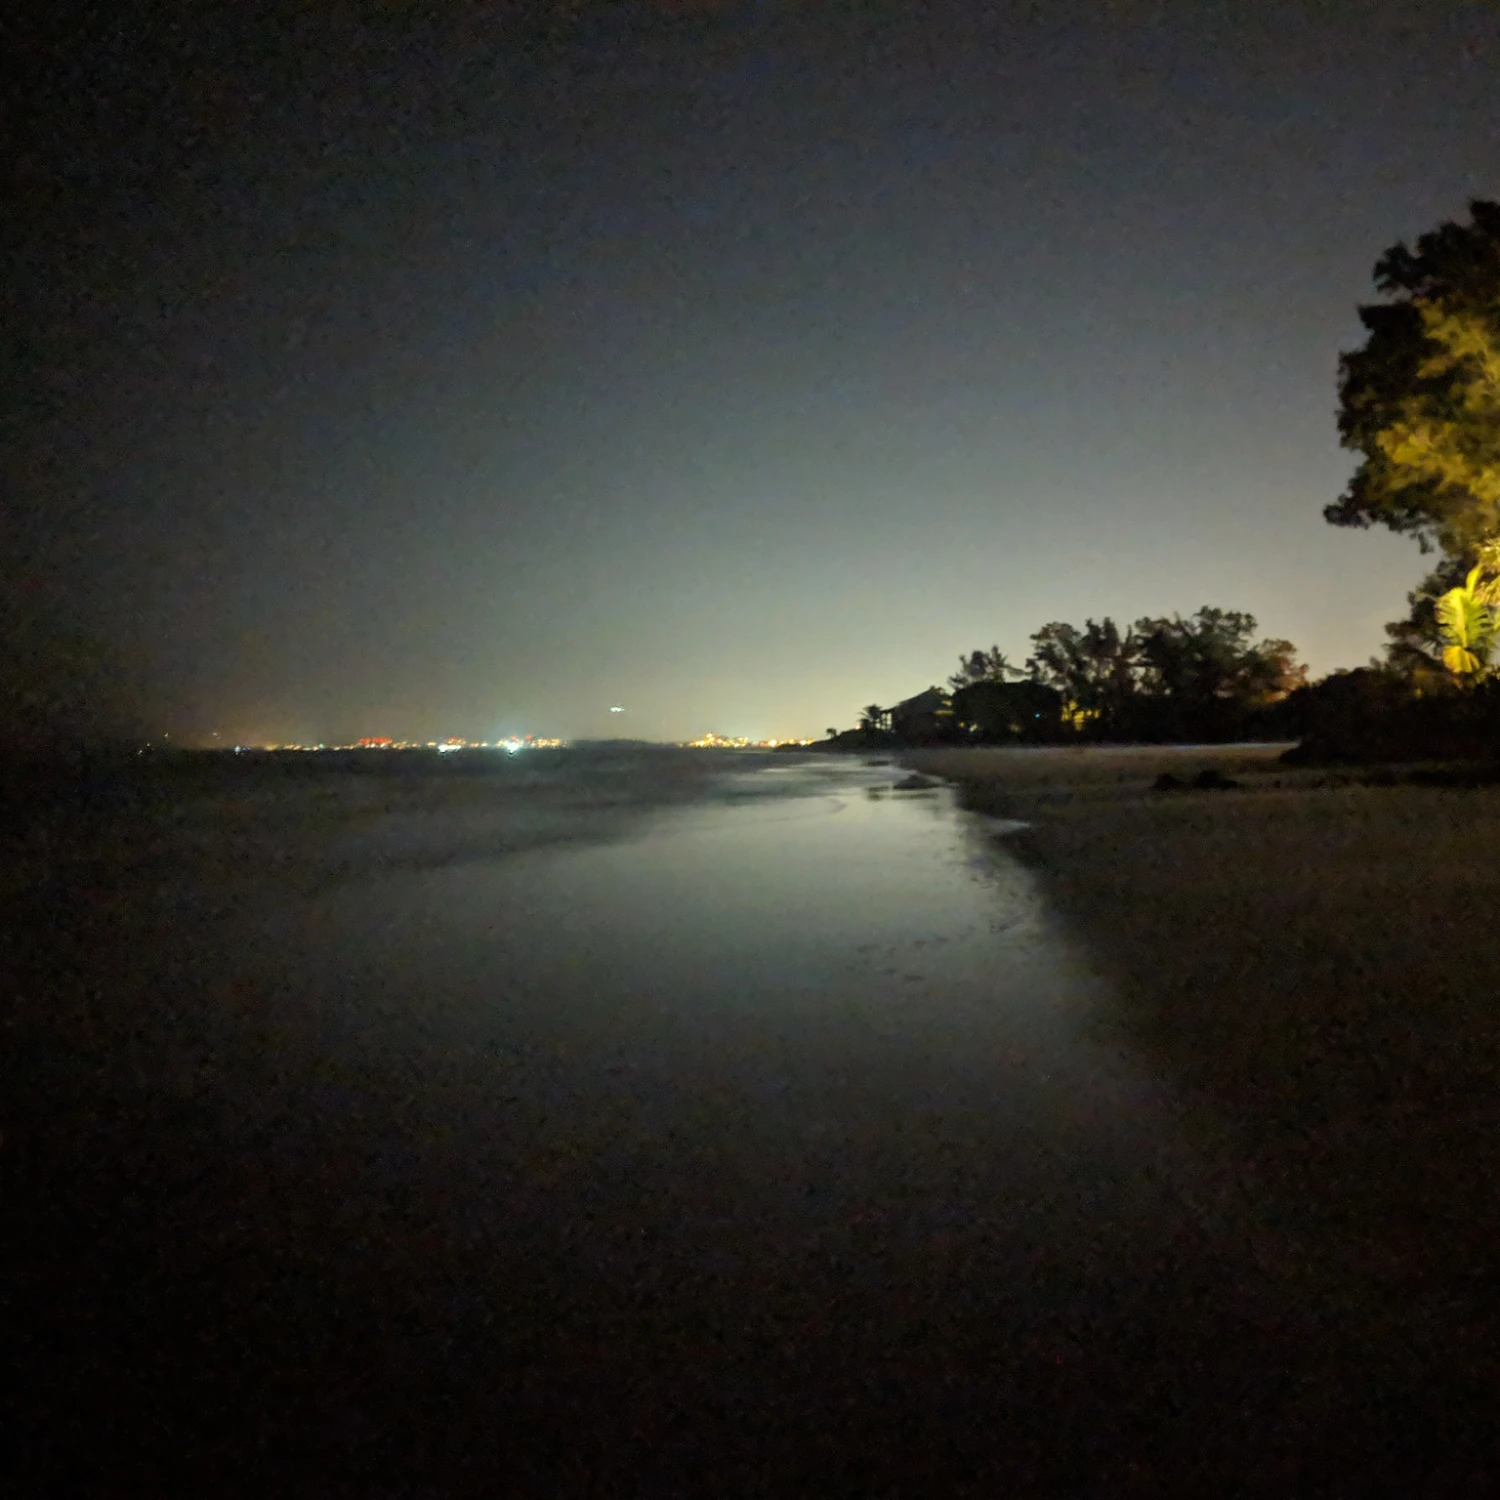 Night sea view